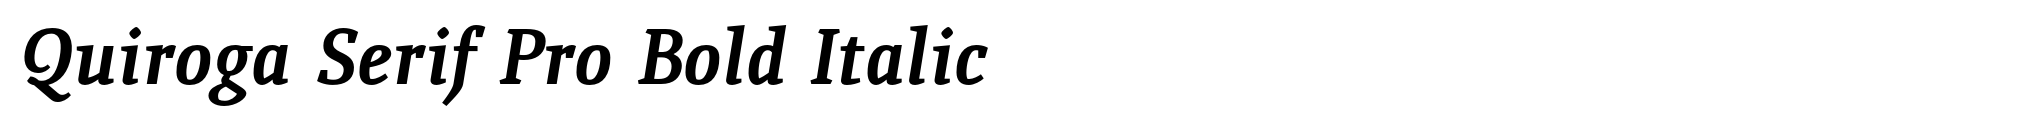 Quiroga Serif Pro Bold Italic image